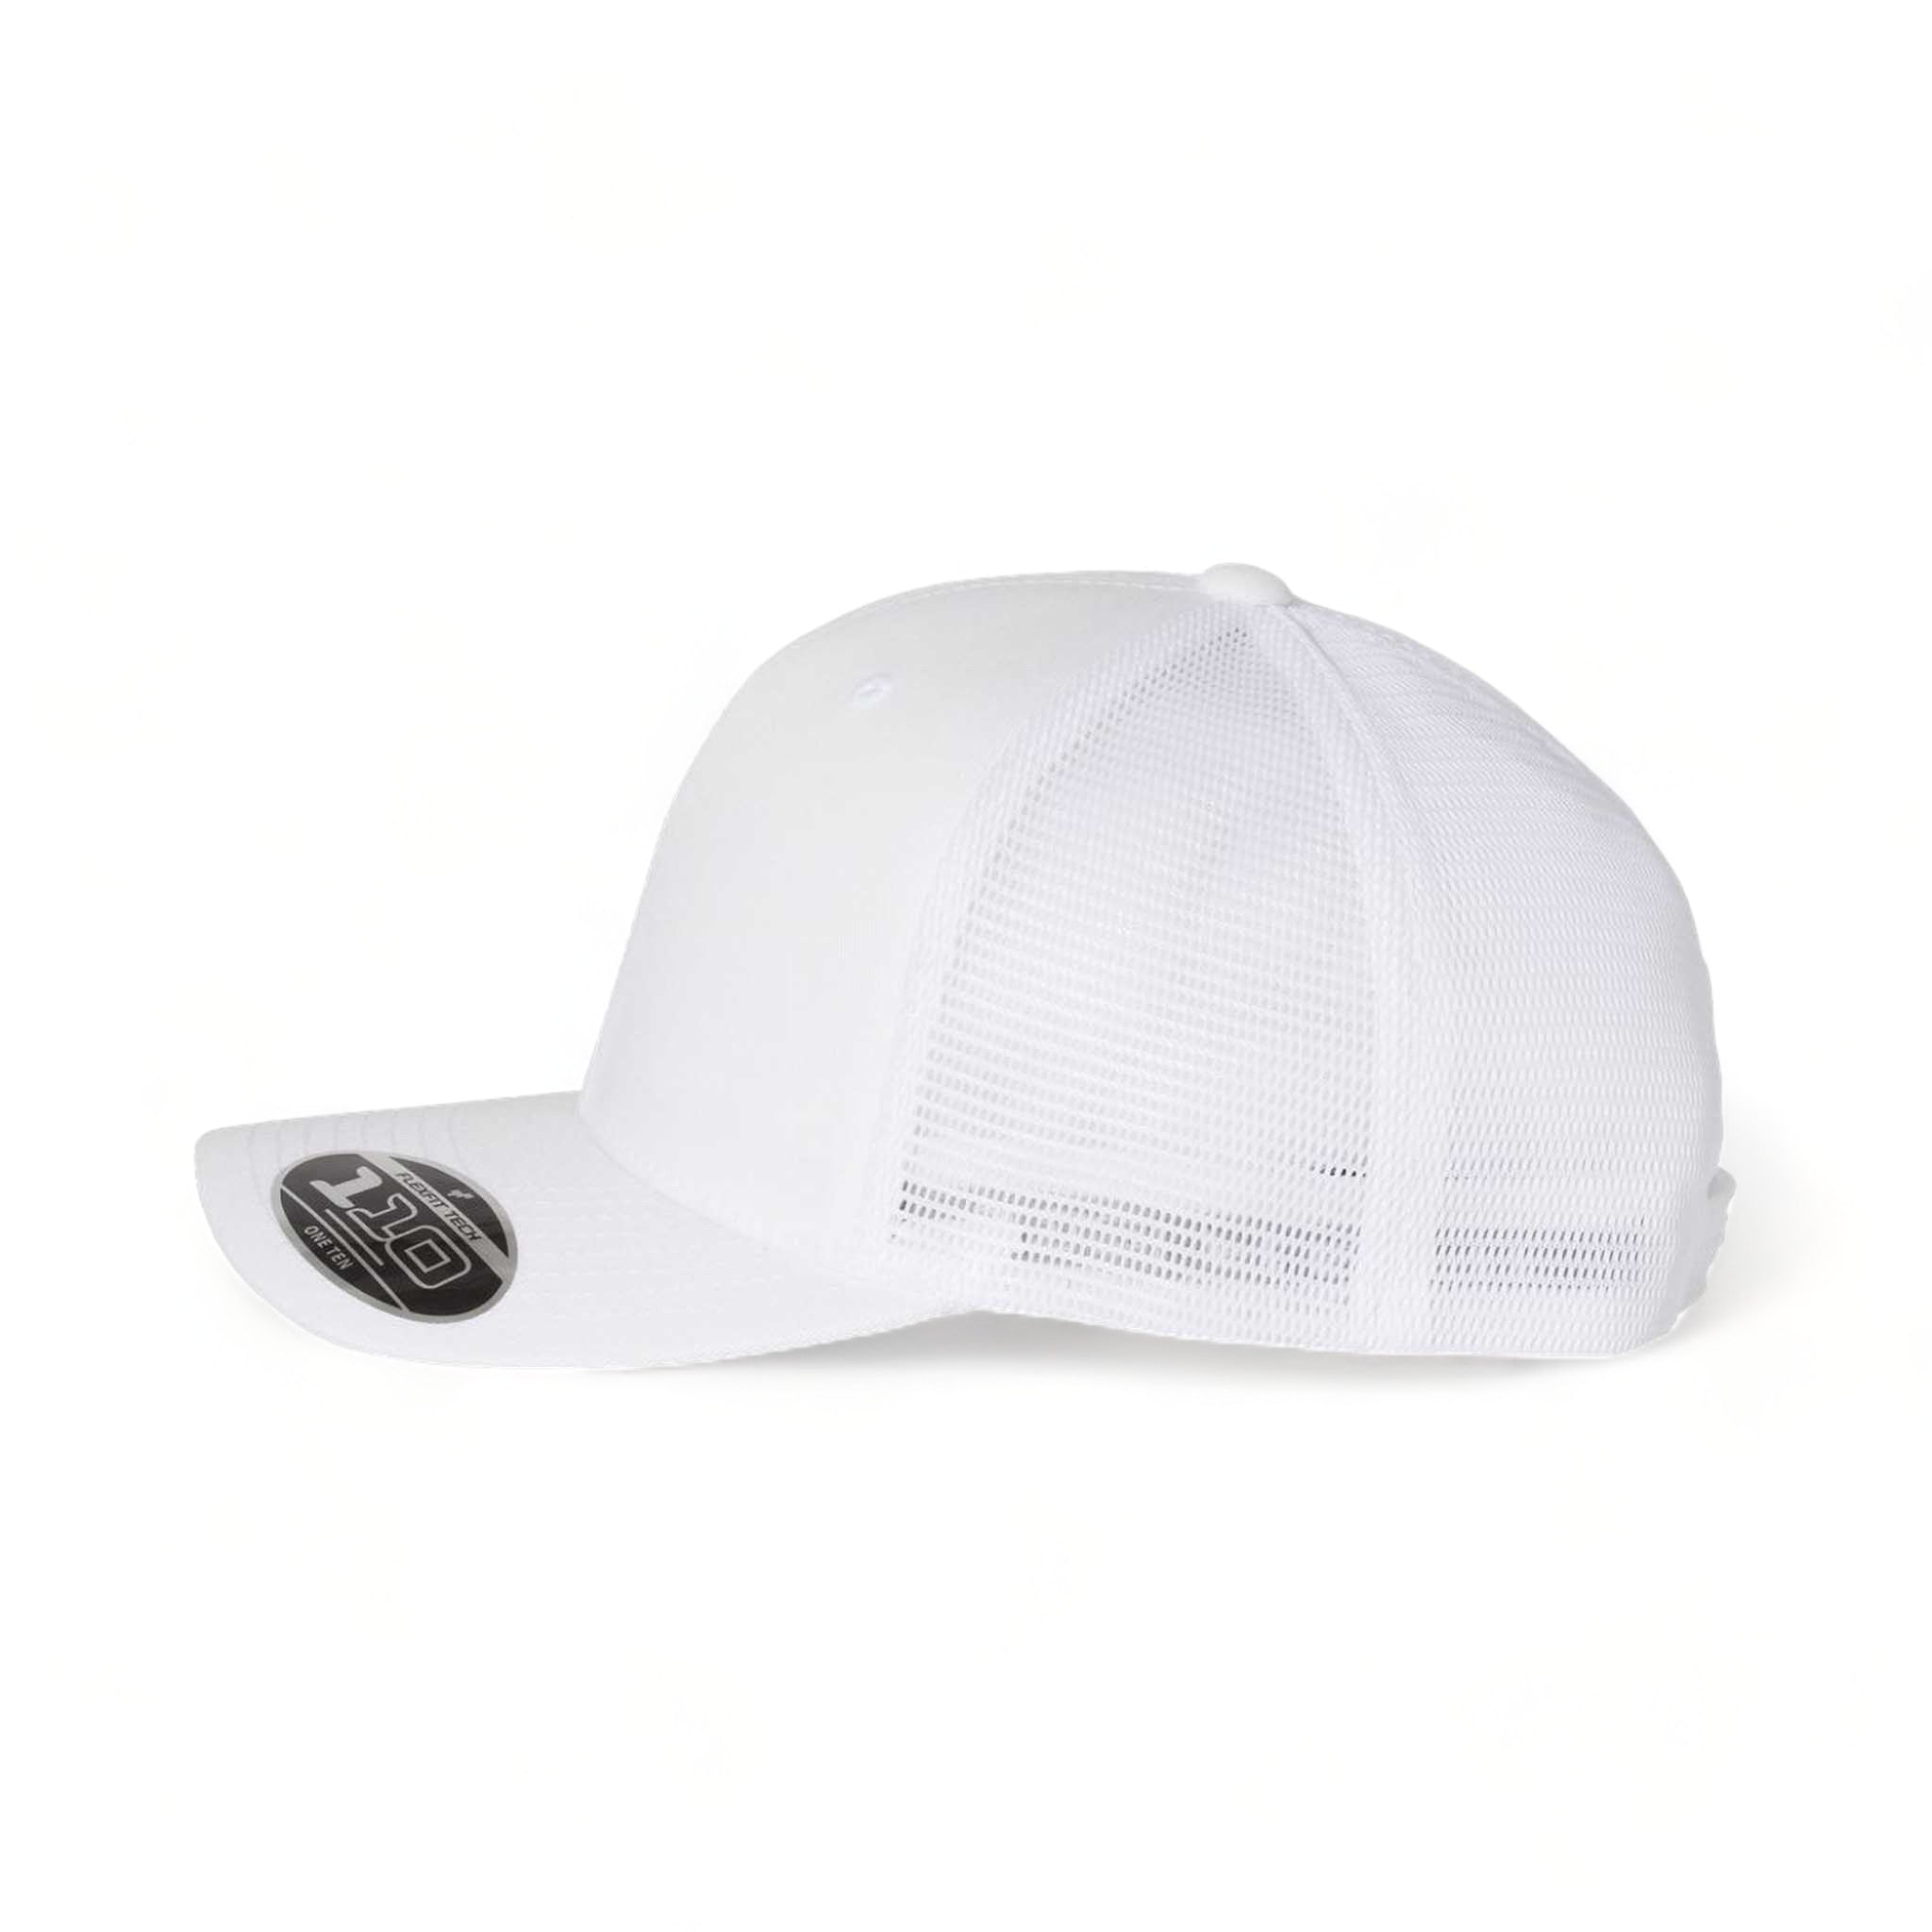 Side view of Flexfit 110M custom hat in white